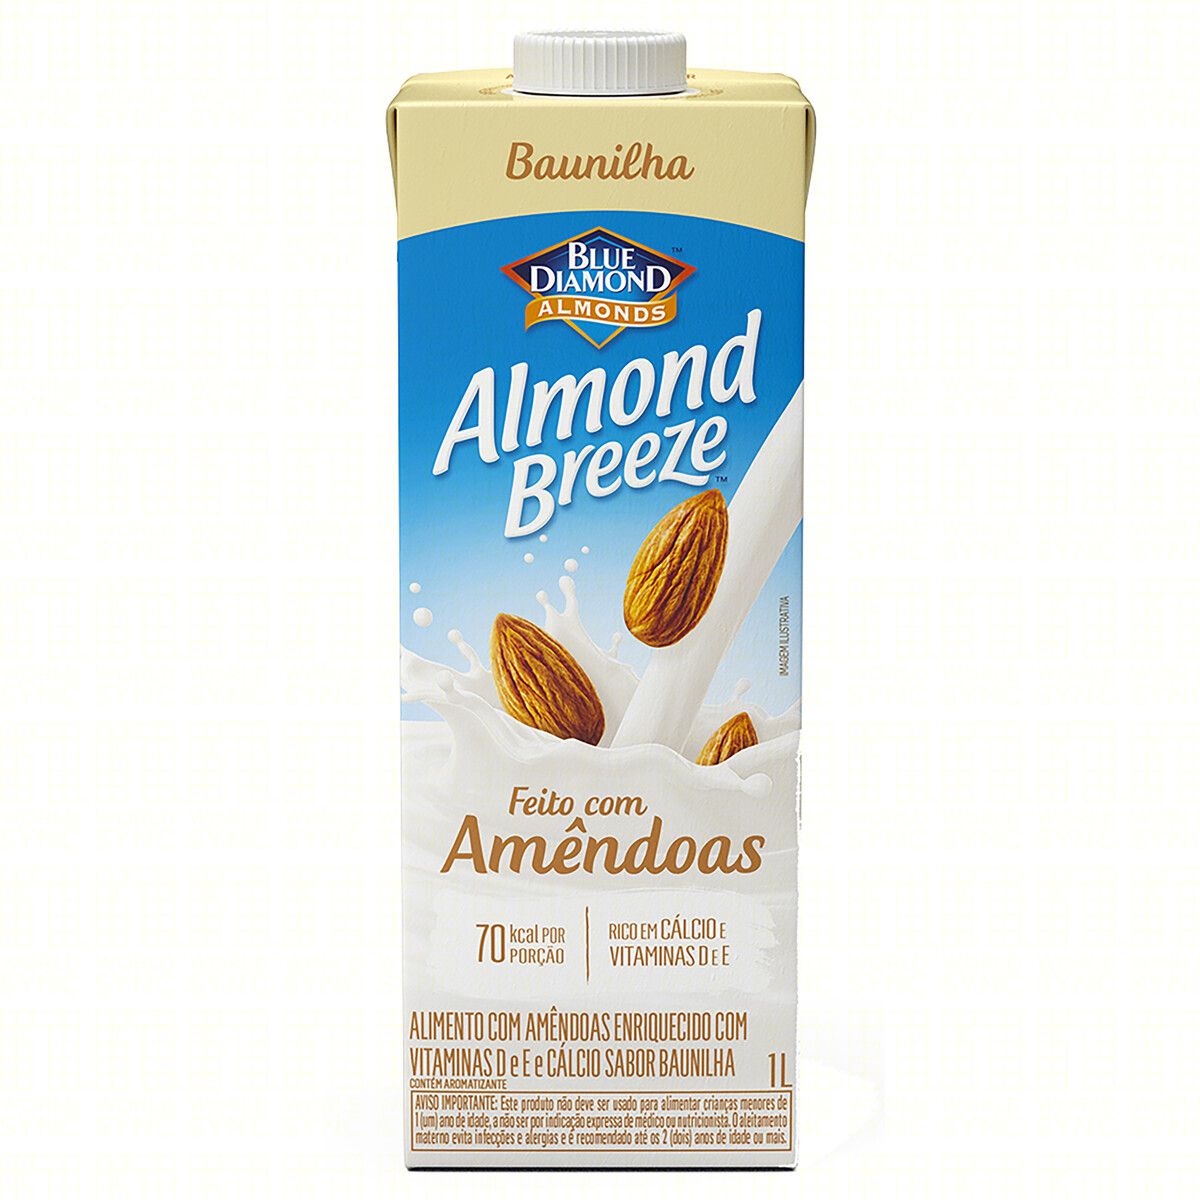 Alimento Almond Breeze com Amêndoas Baunilha 1l